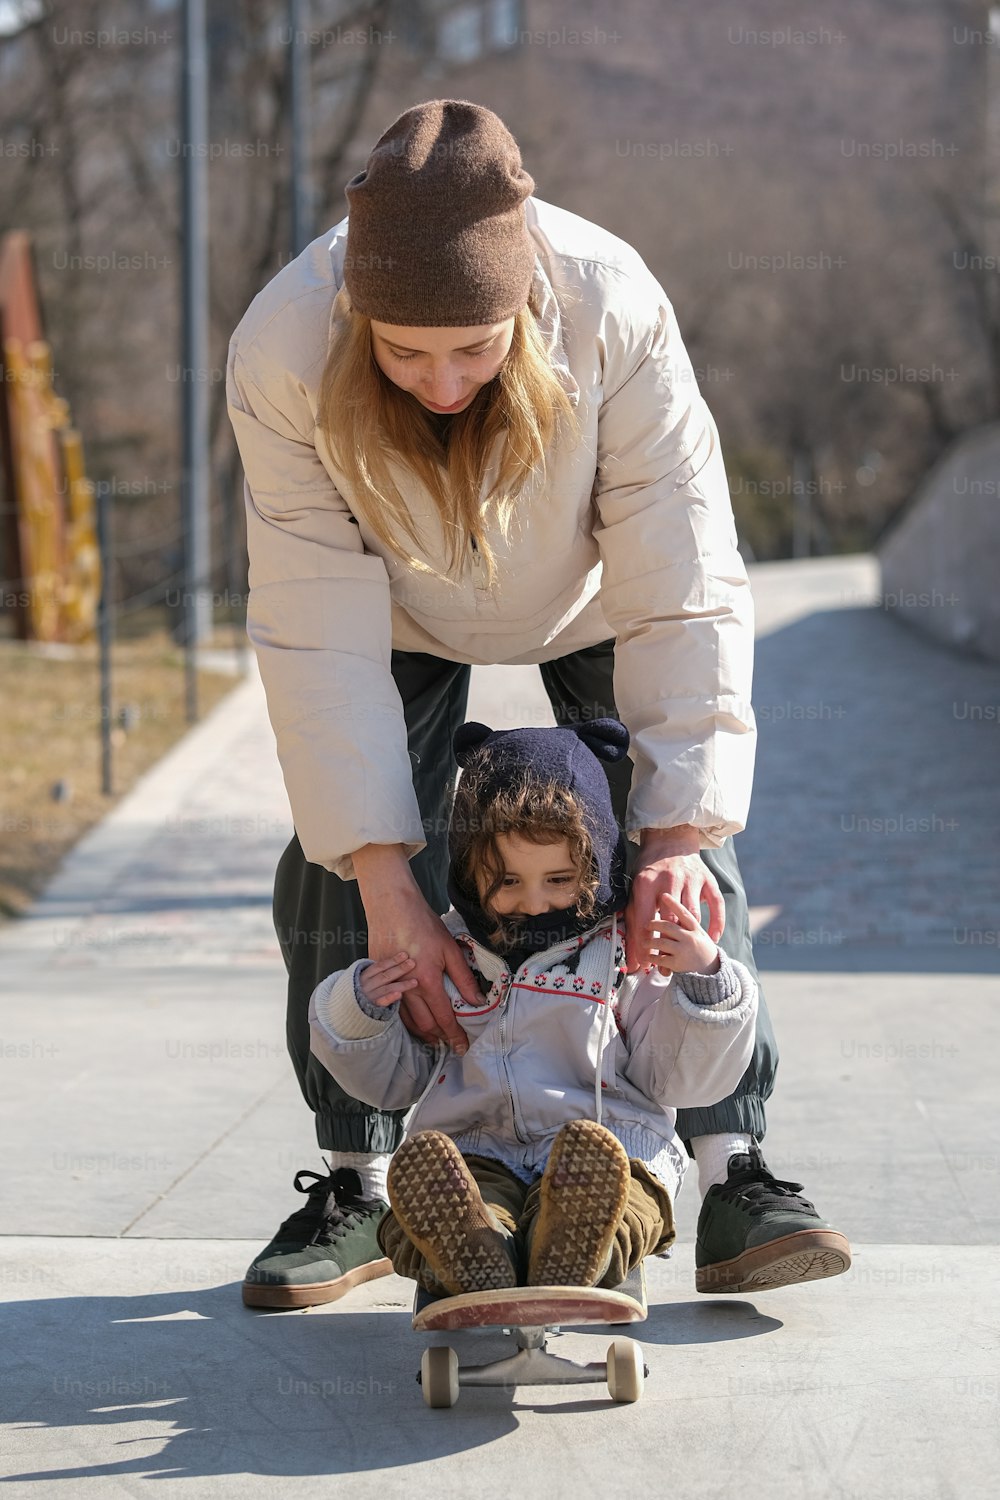 a woman helping a child ride a skateboard